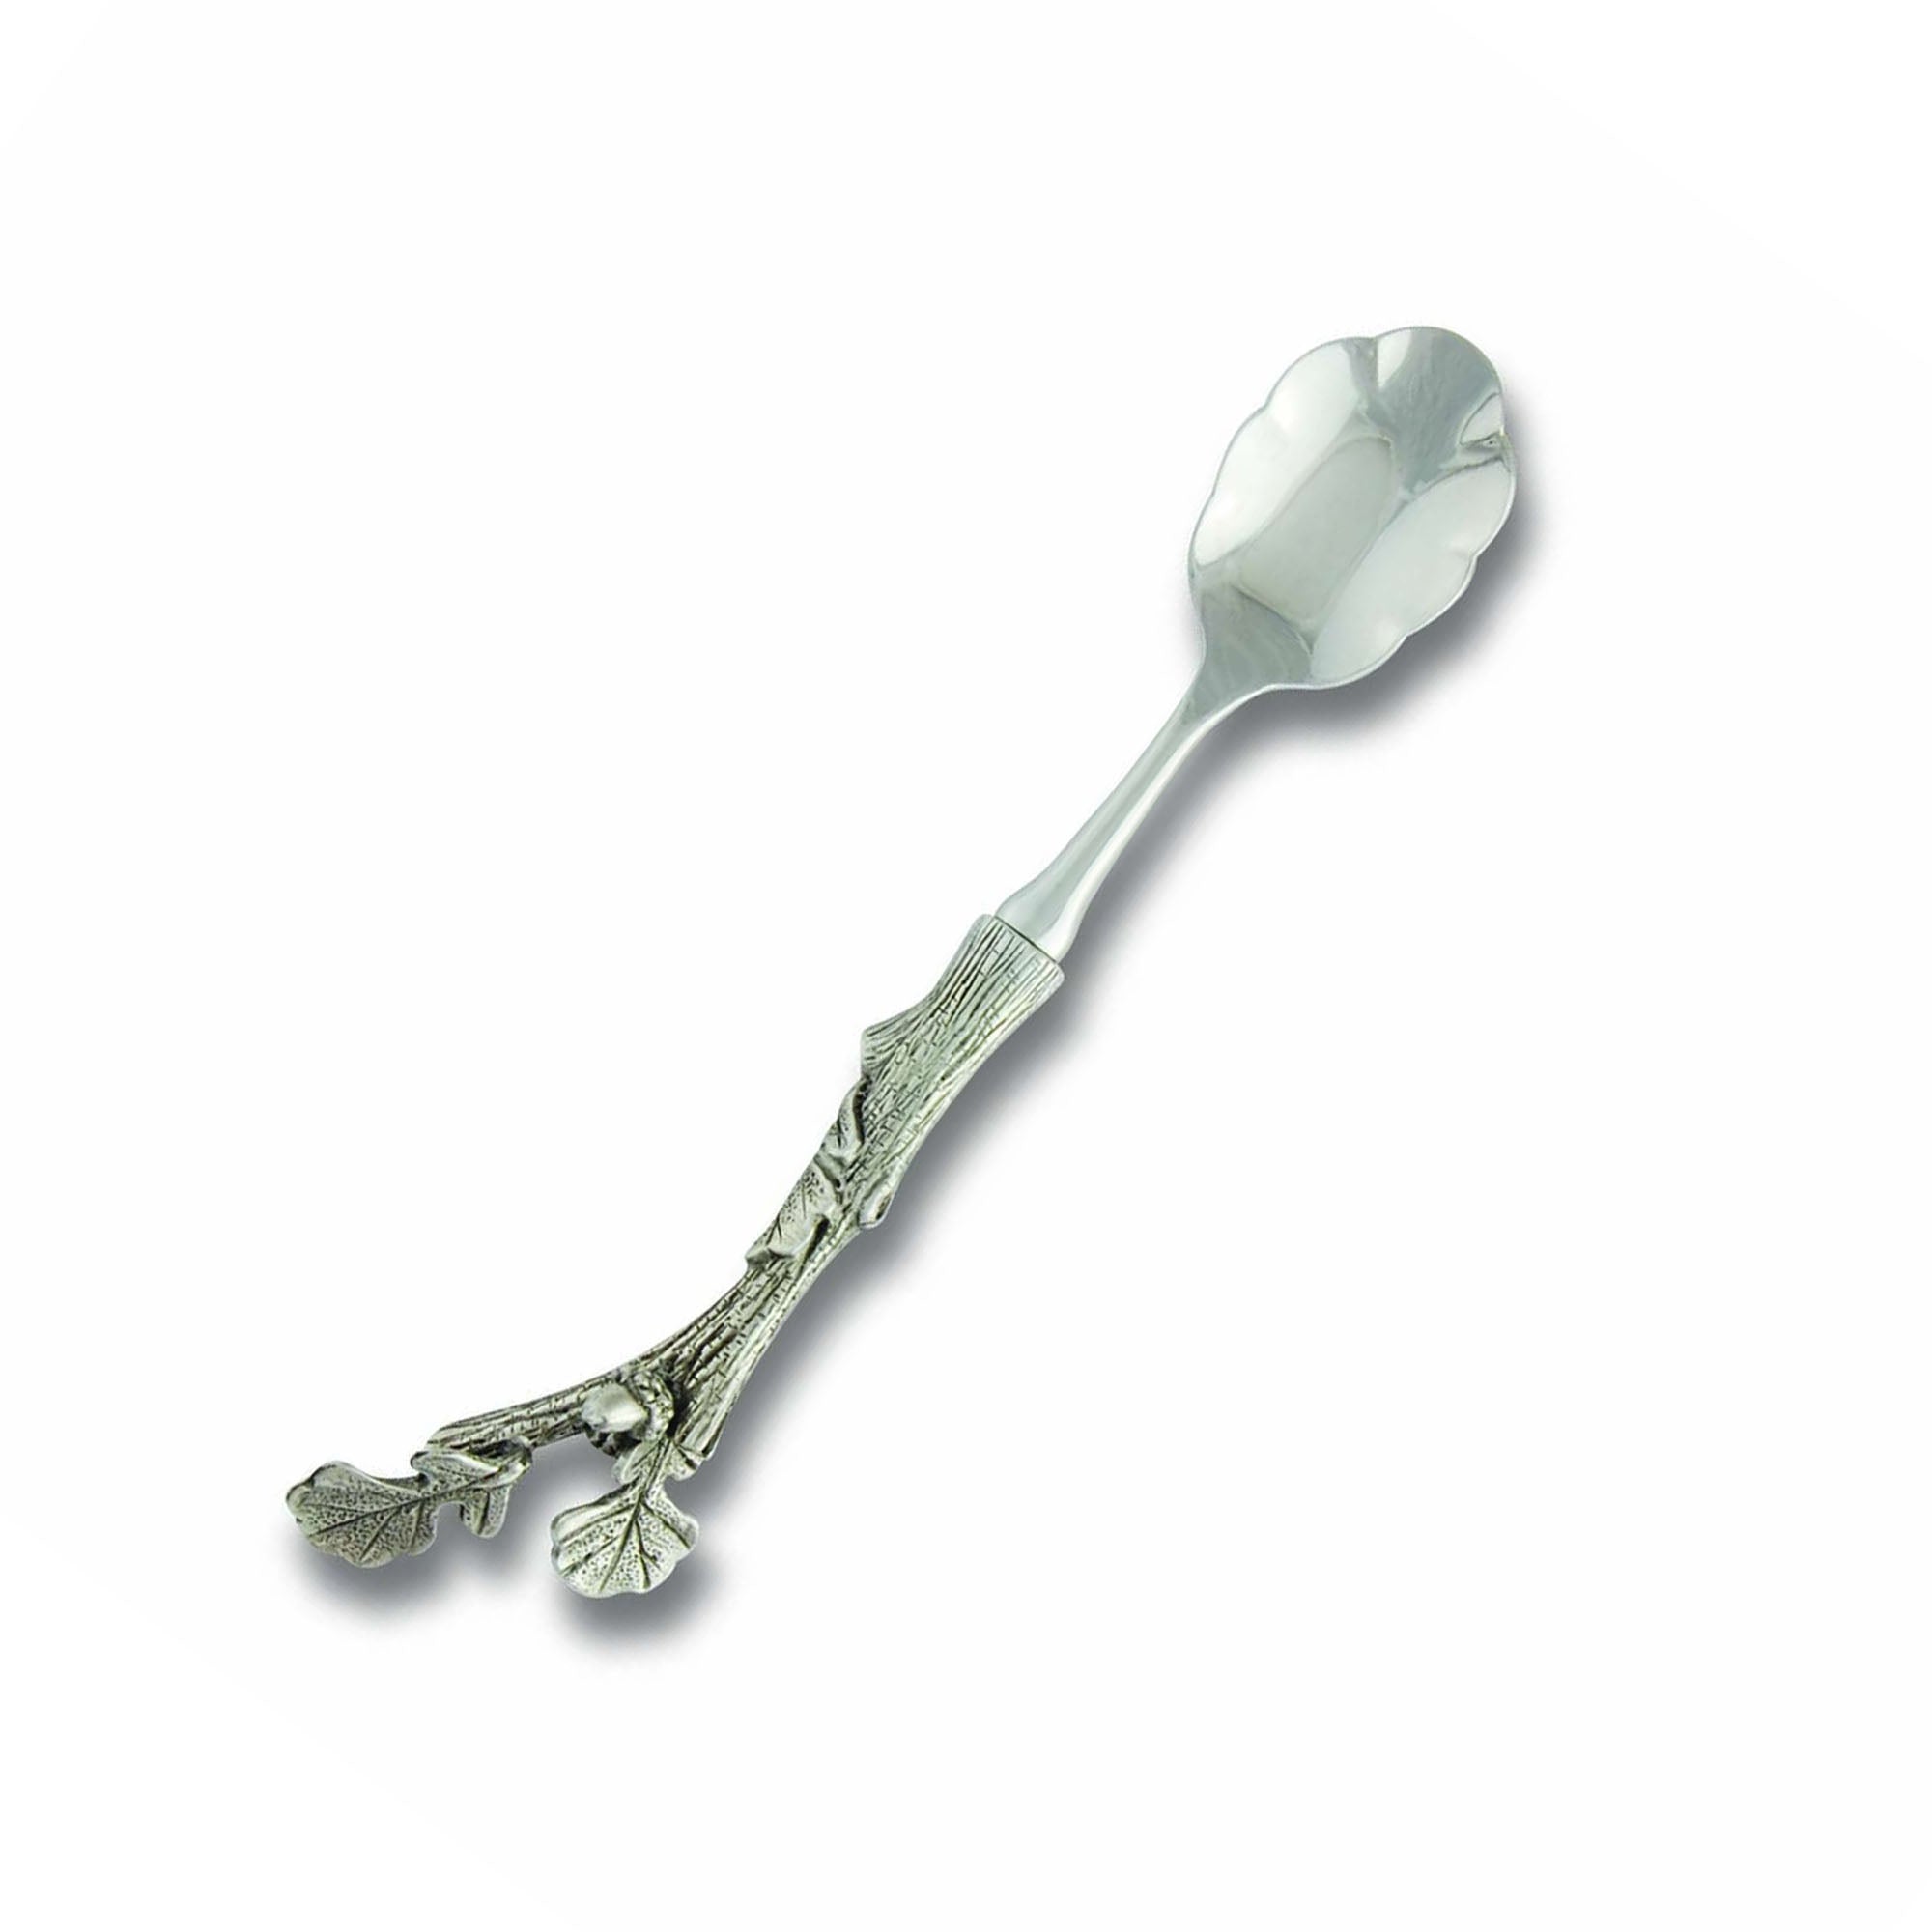 Vagabond House Acorn Sugar Spoon Product Image